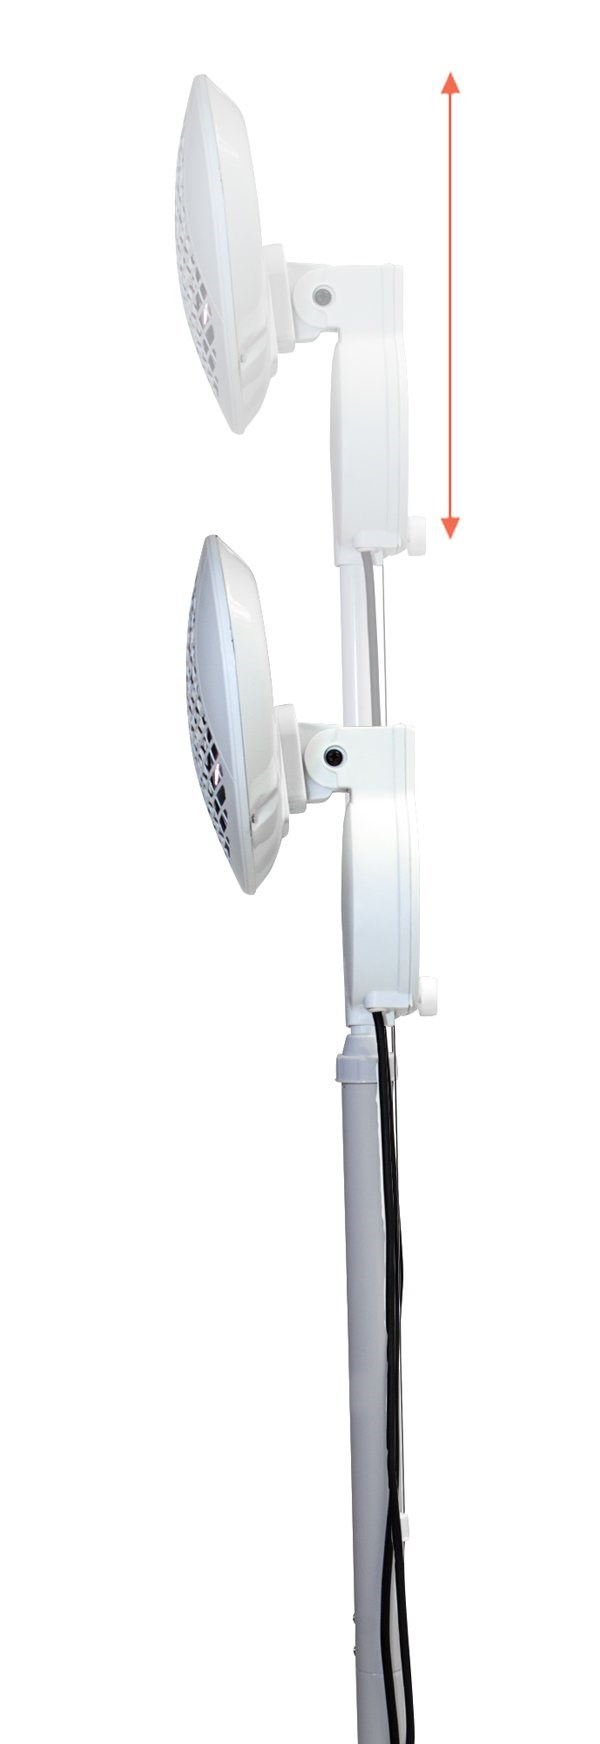 2kW IPX4 Freestanding Electric Quartz Bulb Patio Heater in White | Heatlab®